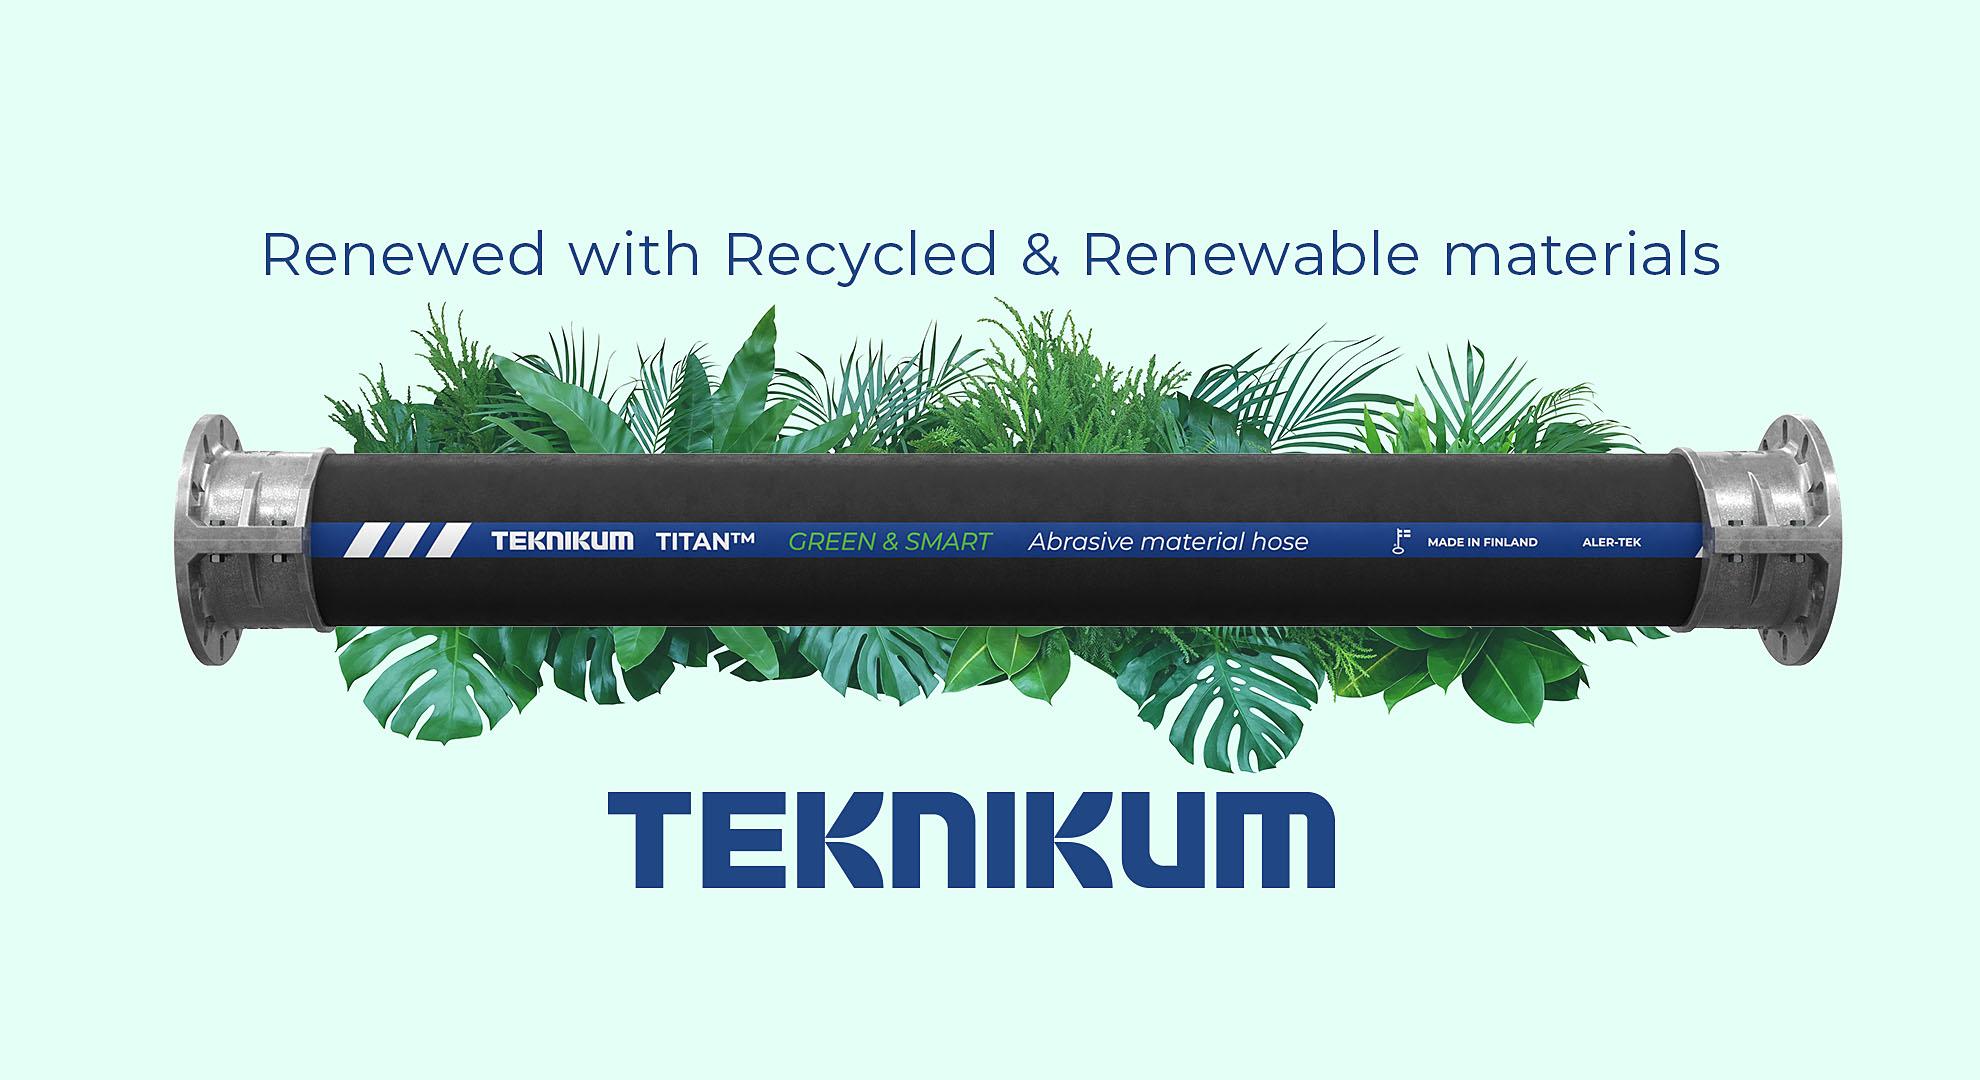 Teknikum TITAN™ GREEN & SMART pipeline solution brings new era to